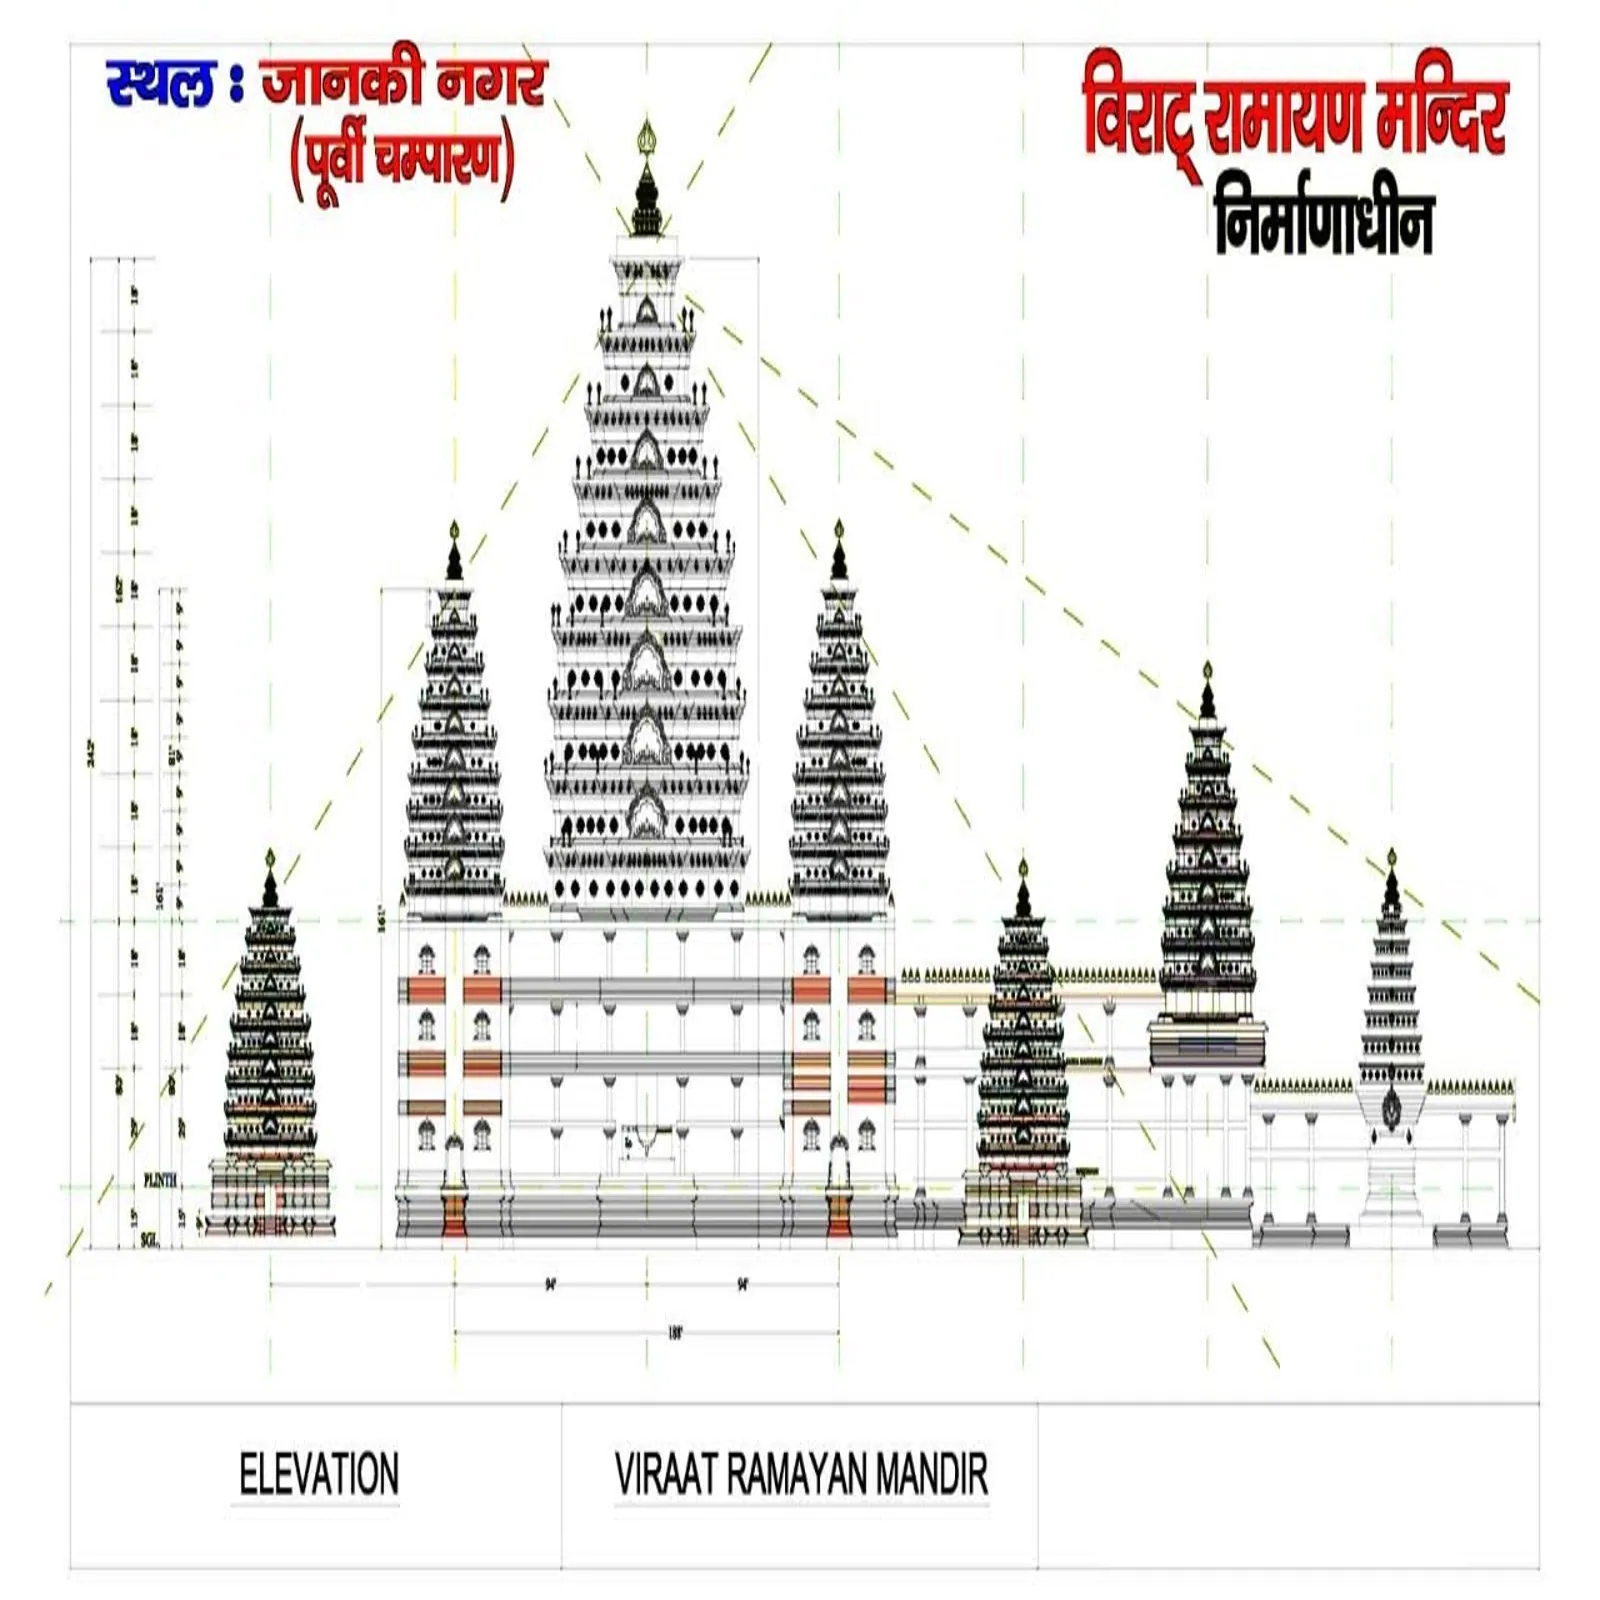 Virat Ramayana temple will be 270 feet high